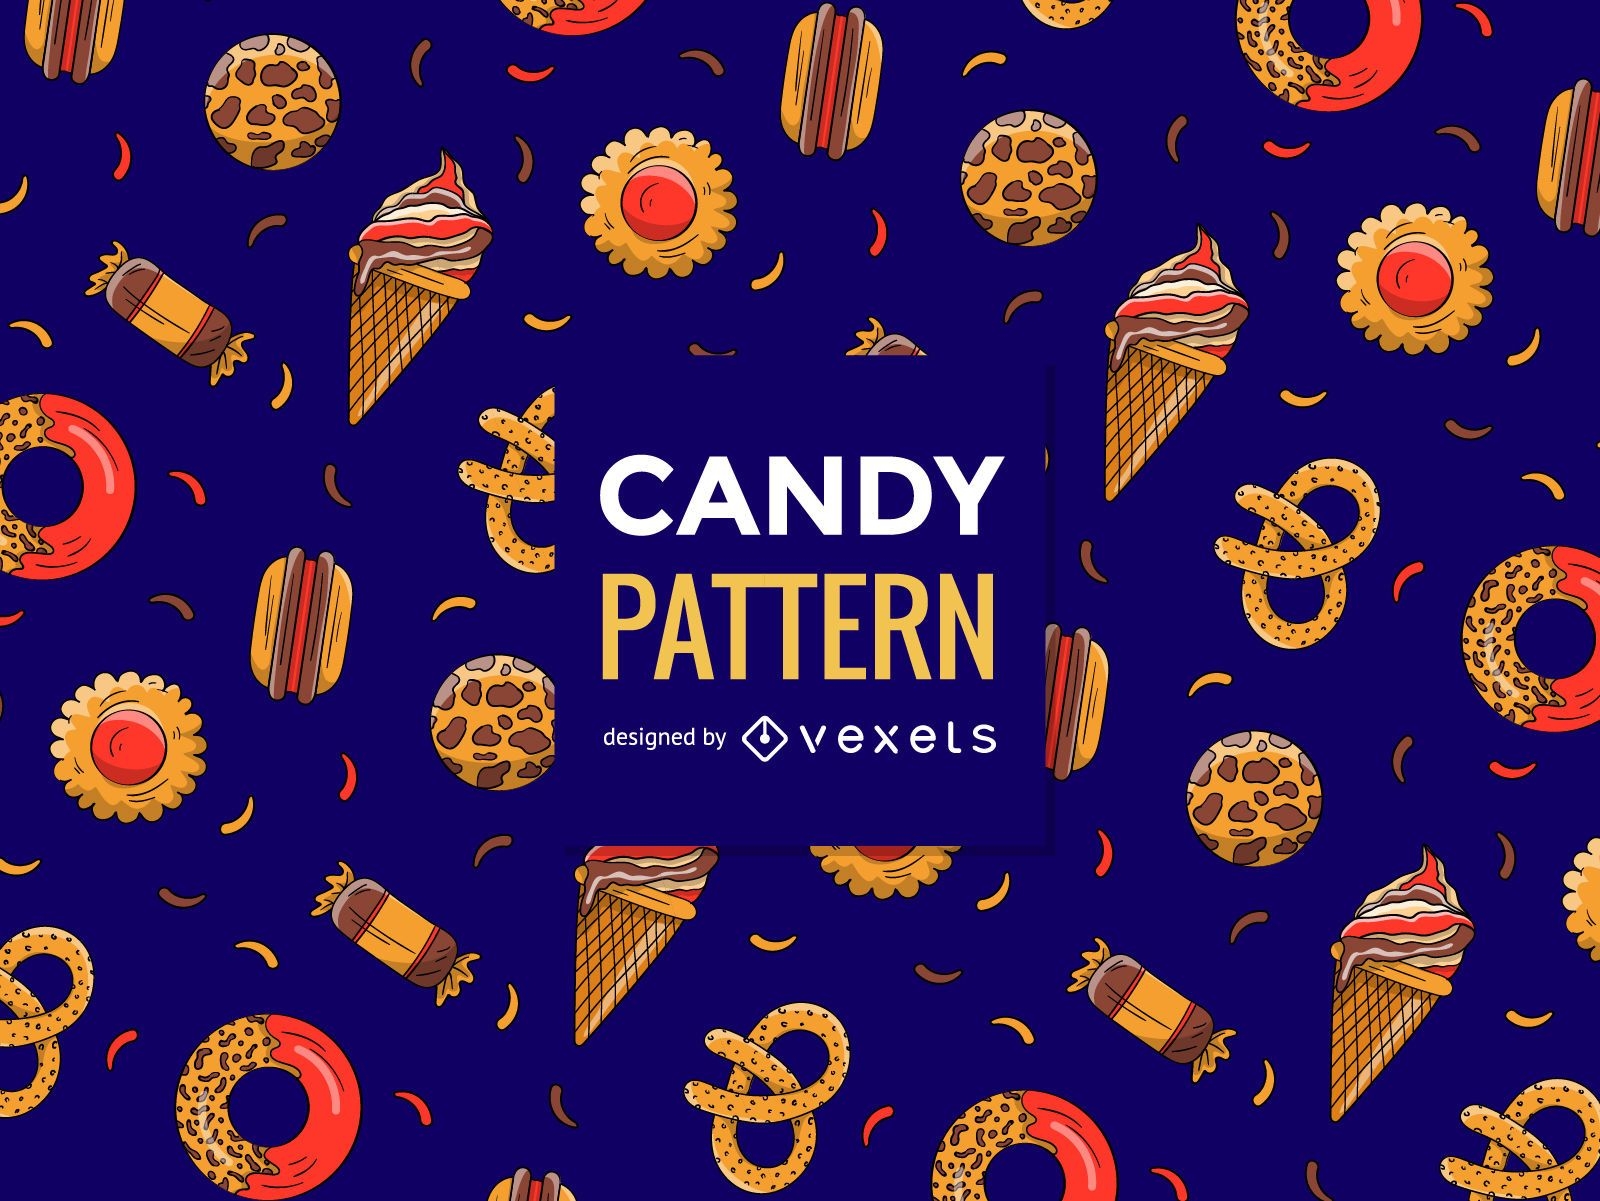 Chocolate candies pattern